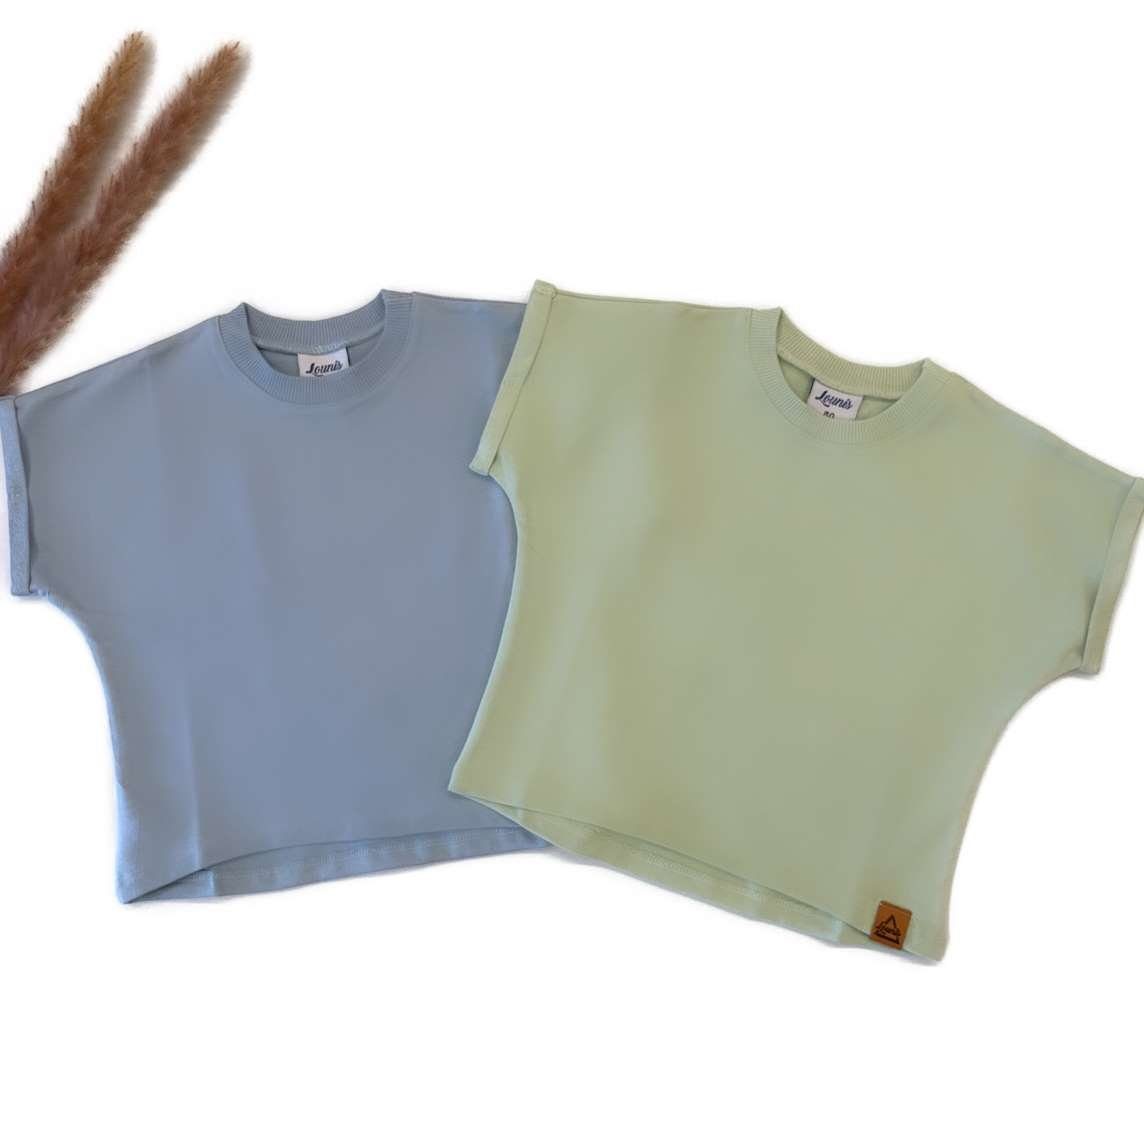 Lounis Oversize-Shirt - T-Shirt - - aus Hellblau Babys & Kindershirt Baumwolle Kleinkinder